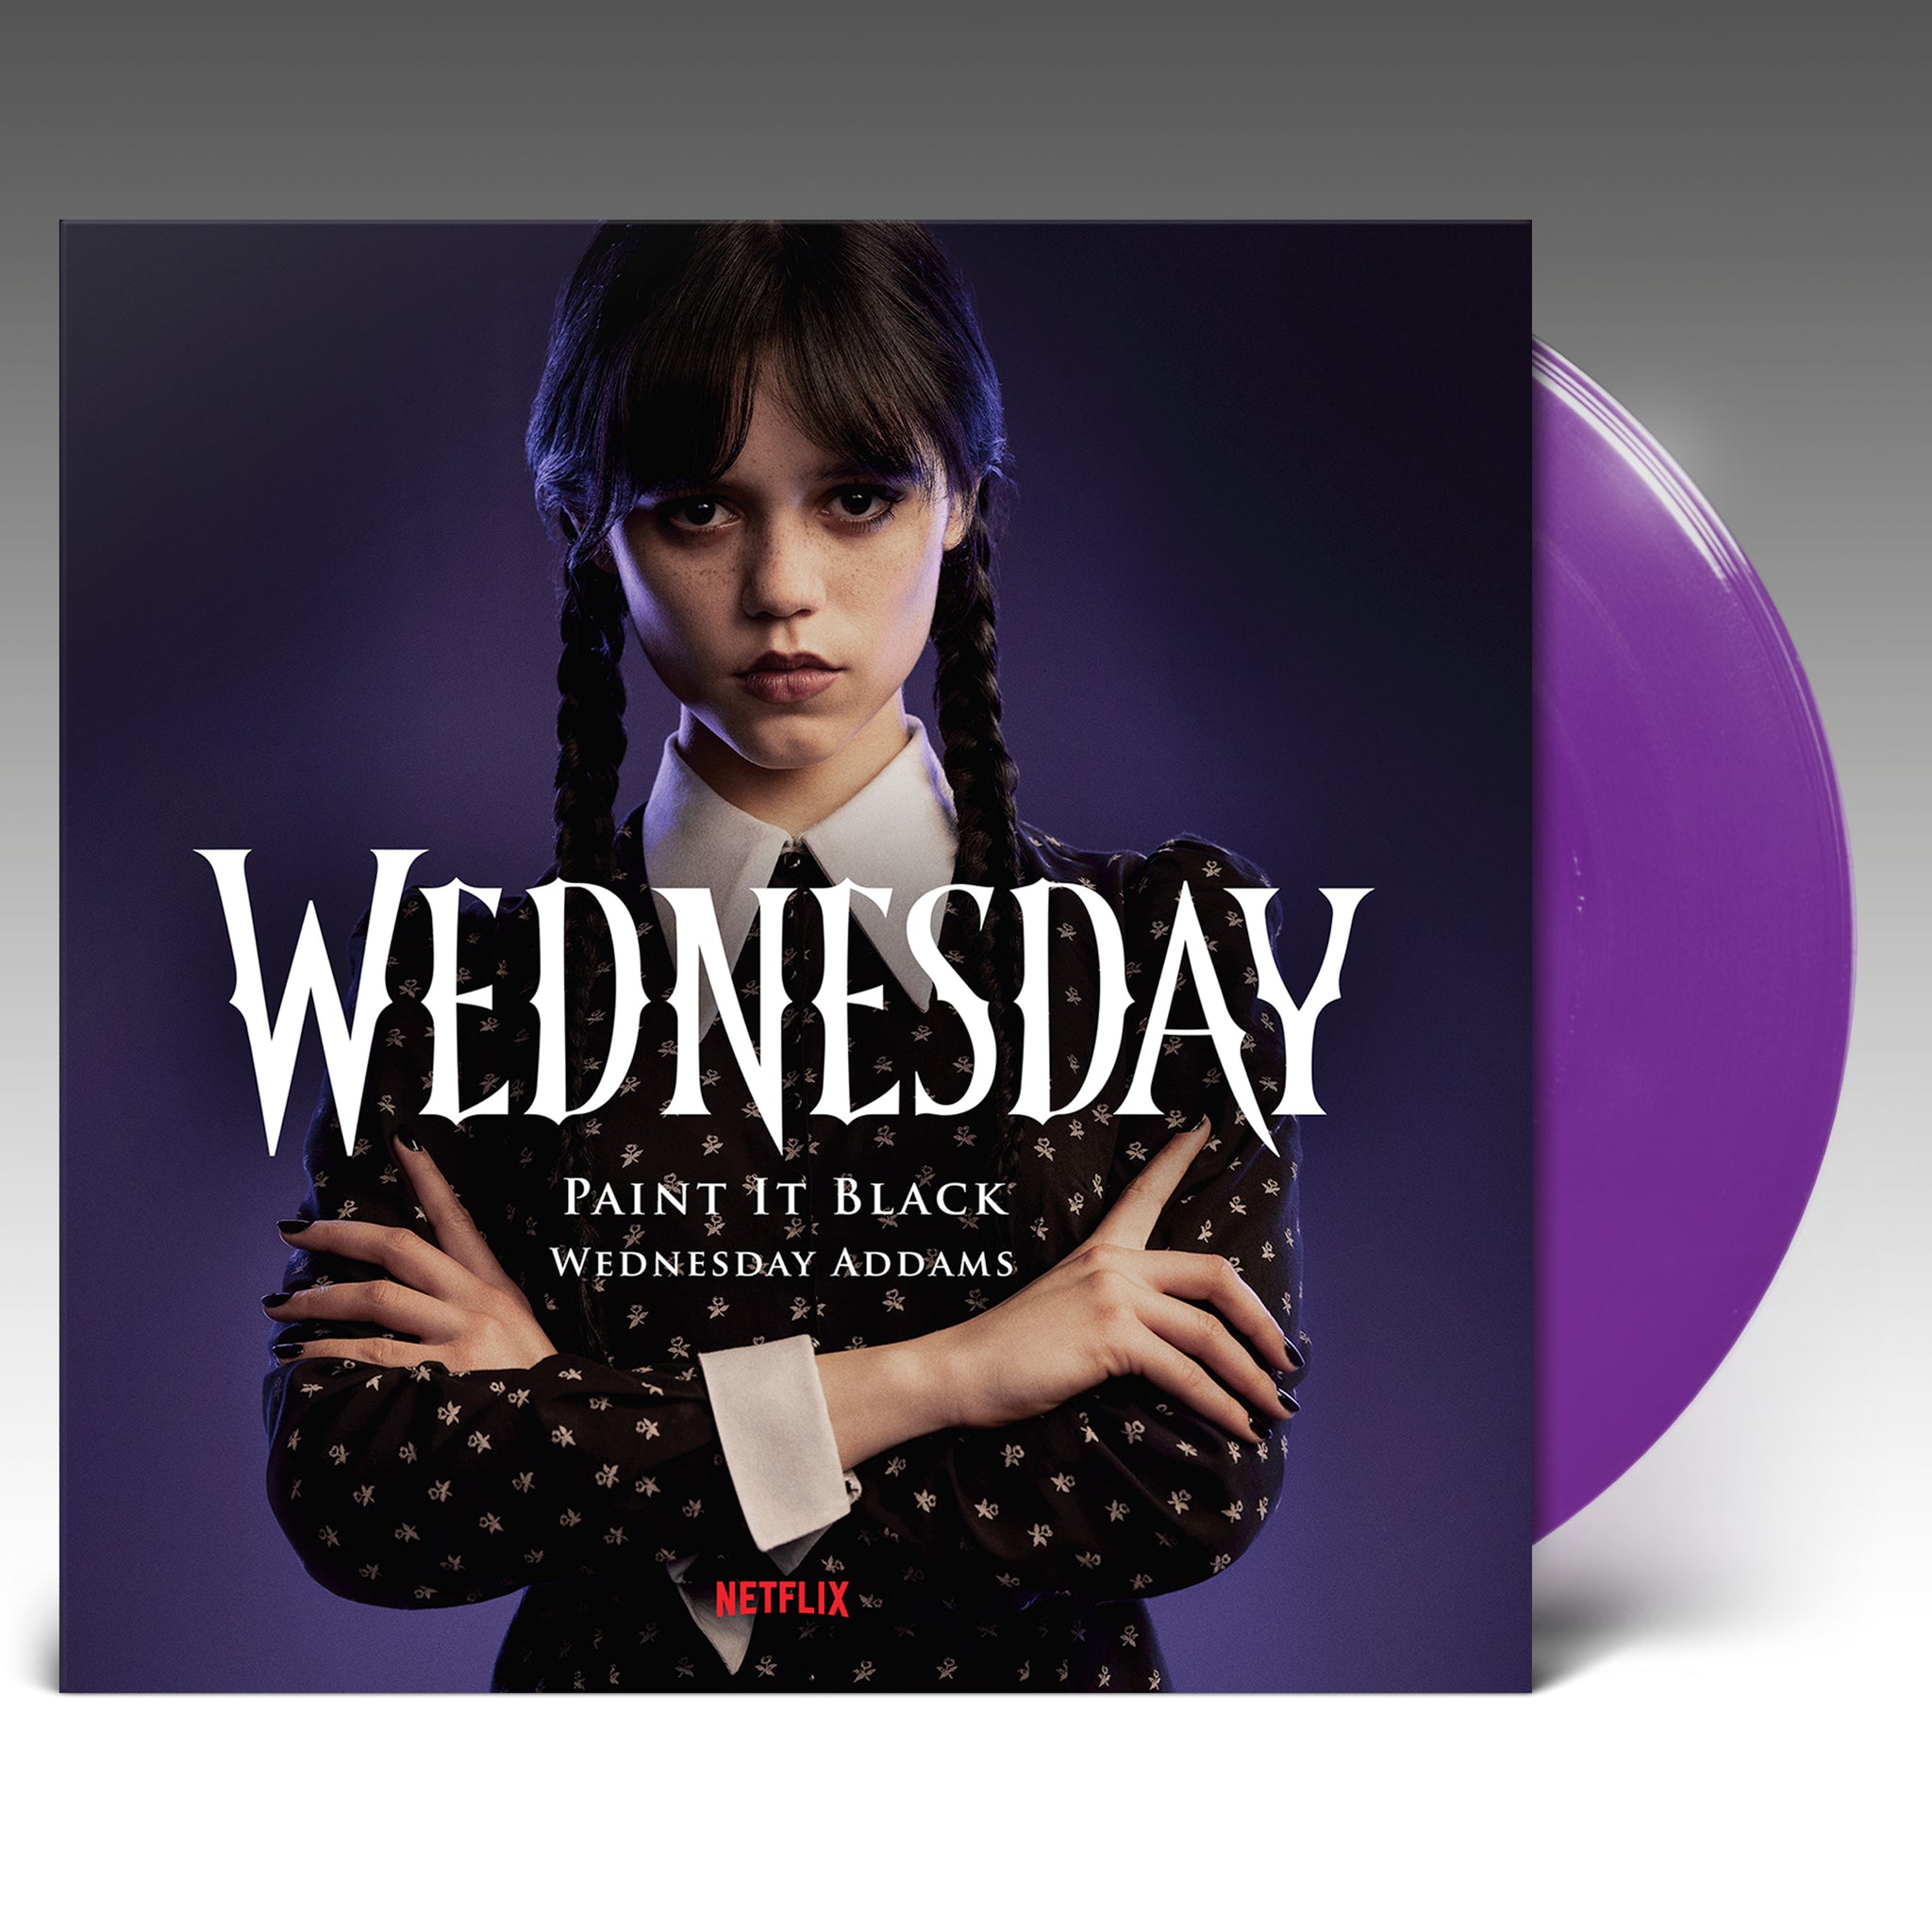 Wednesday (Original Series Soundtrack) - Album by Danny Elfman